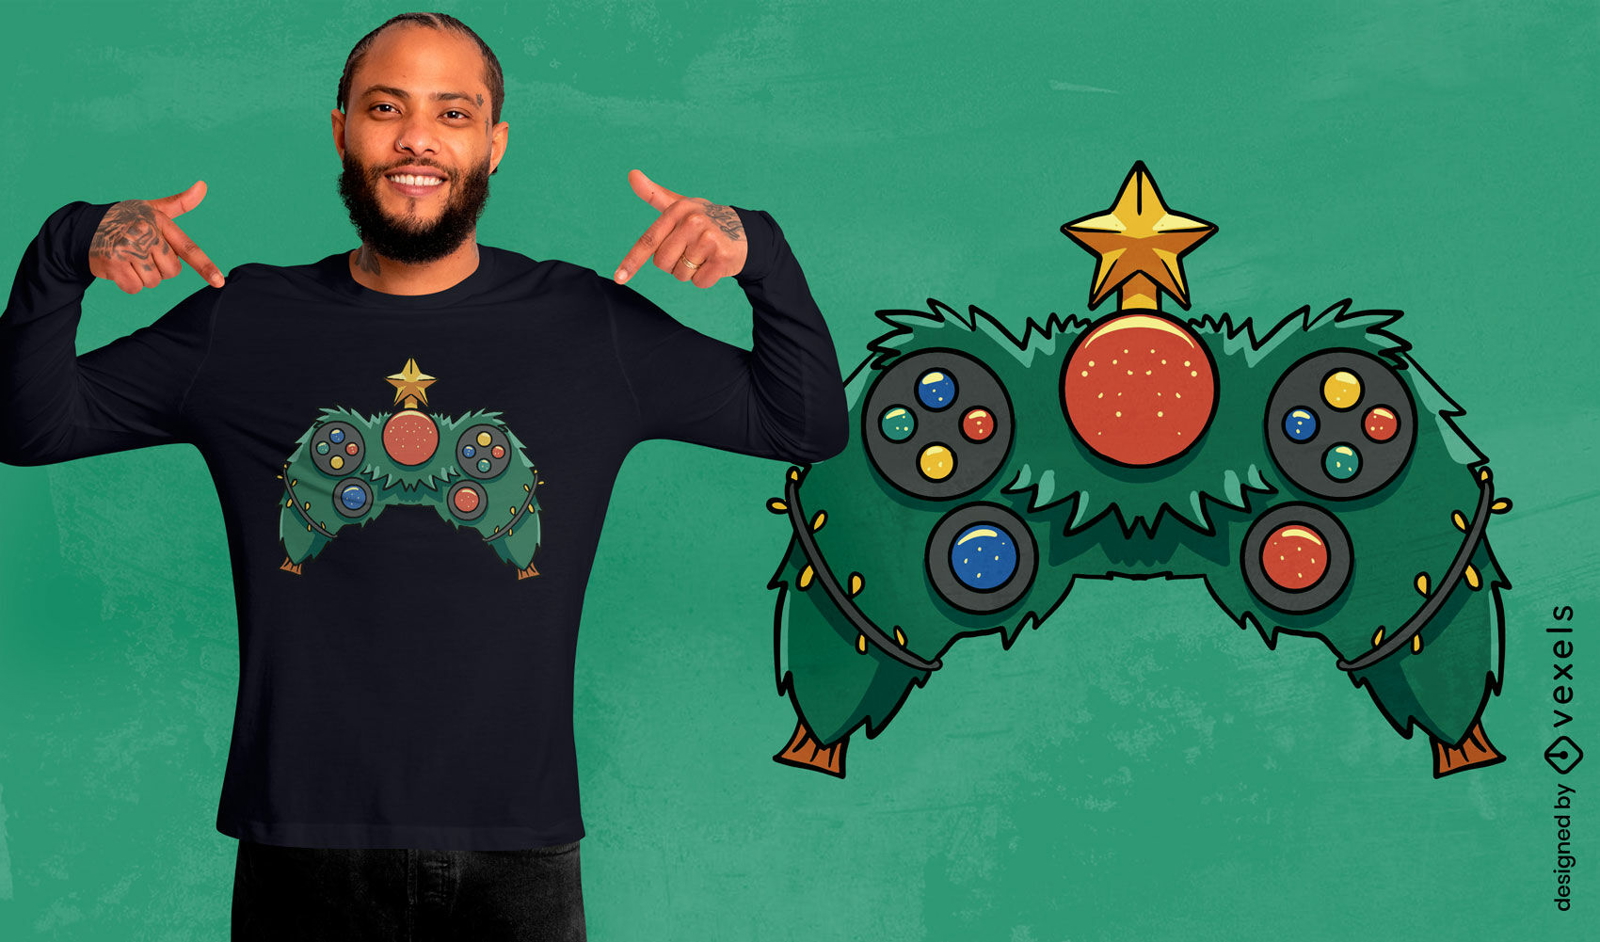  Gaming controller Christmas tree t-shirt design